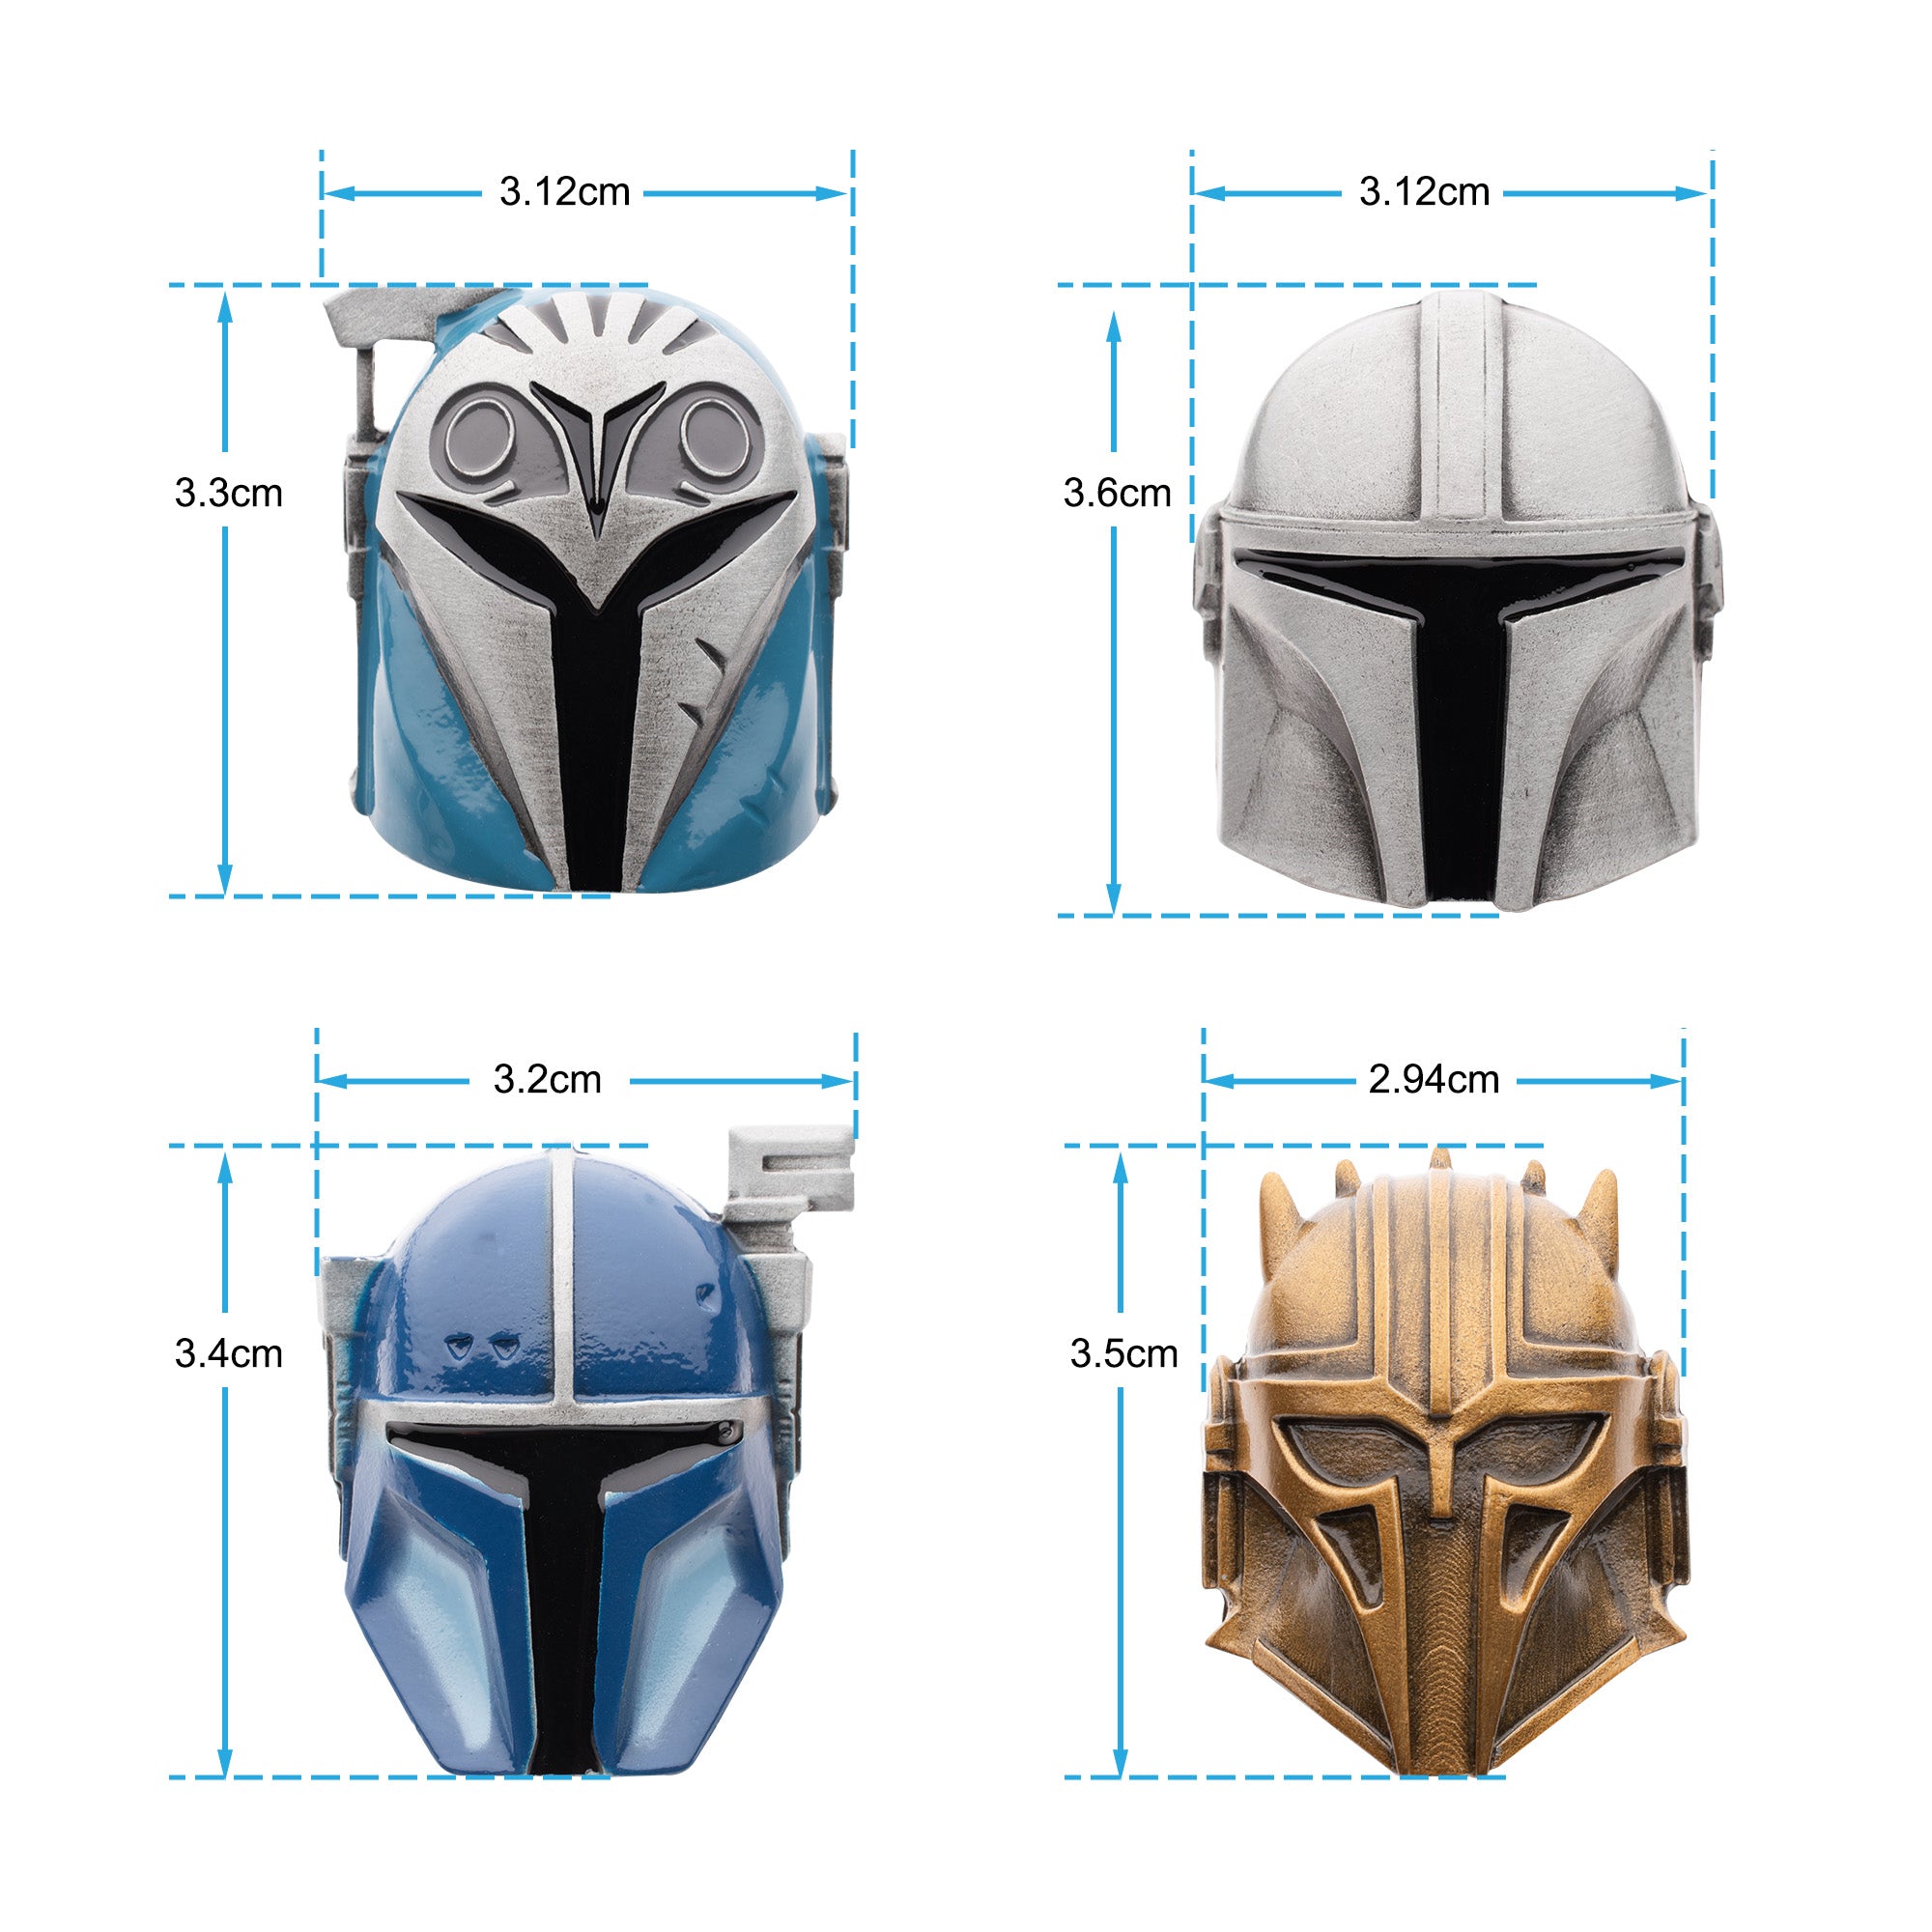 Star Wars Mandalorian 4-pc 3D Helmet Pin Set